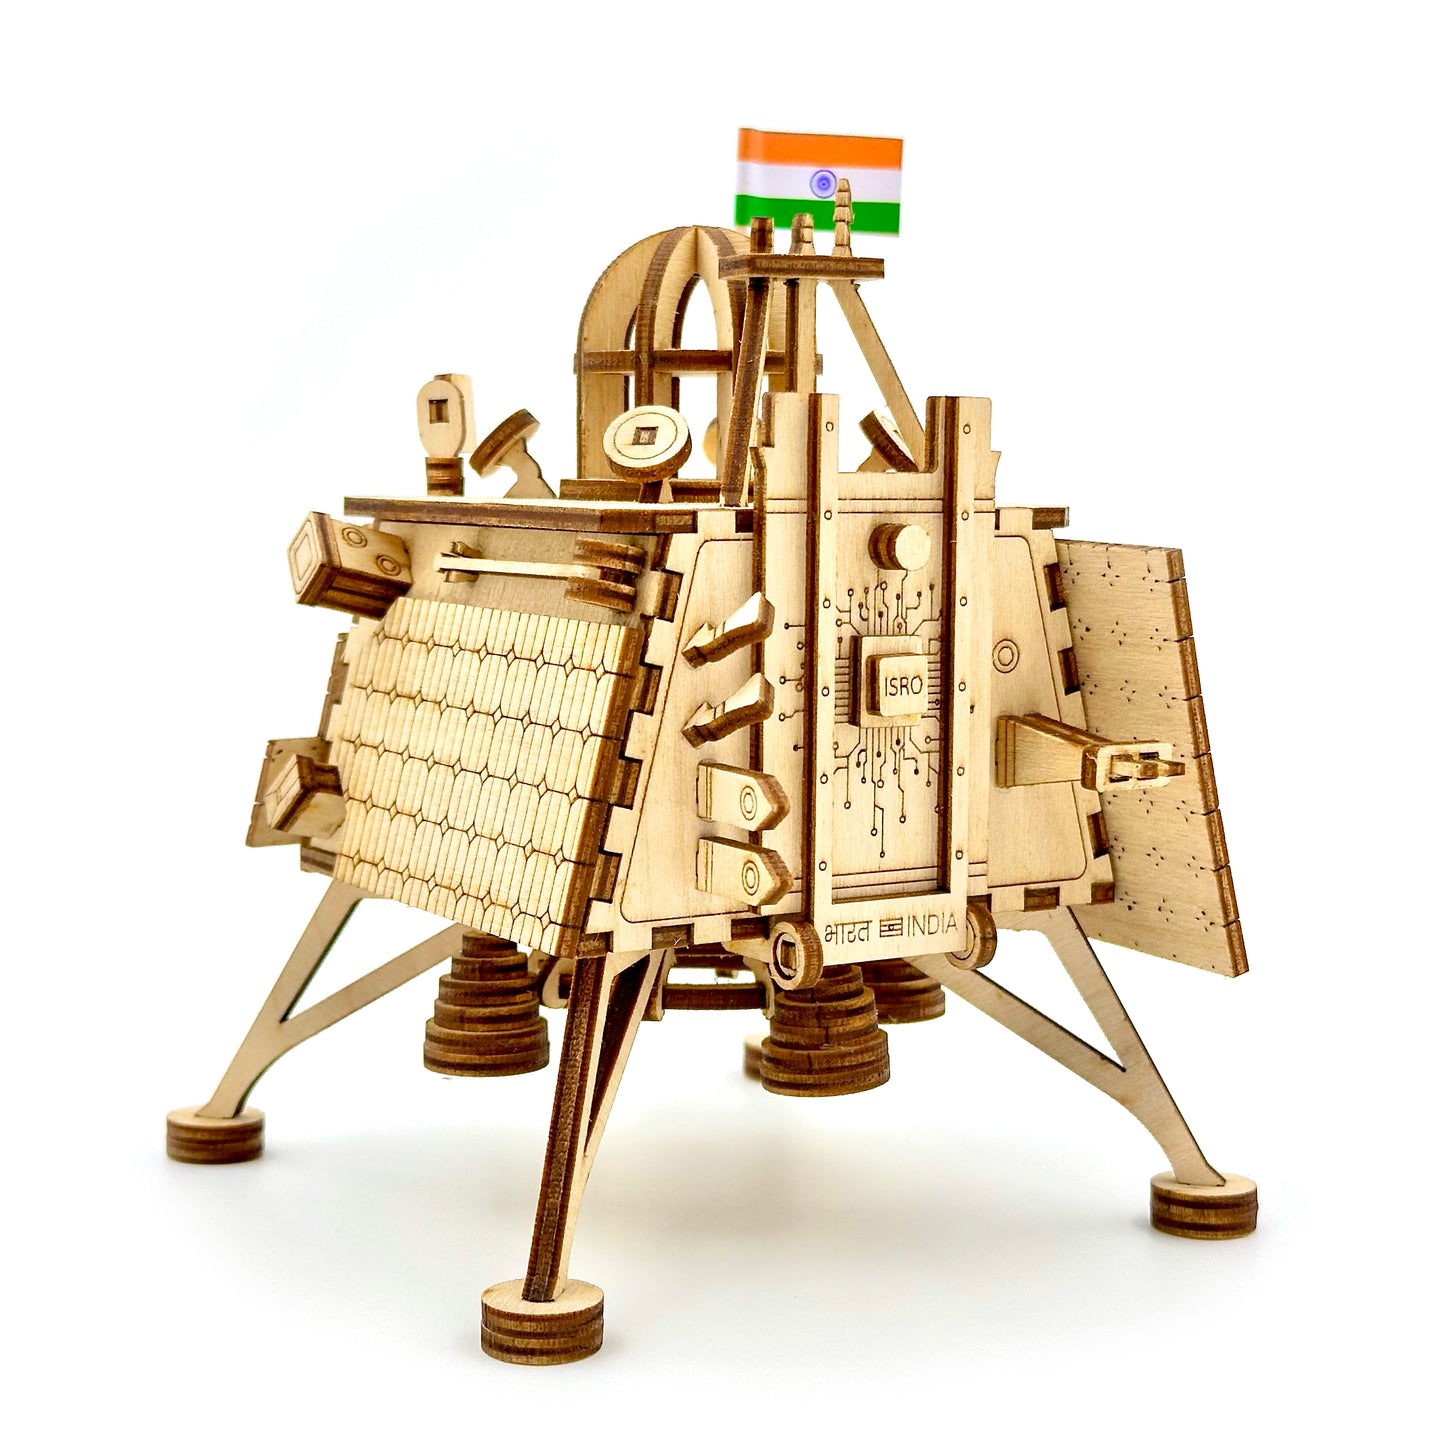 Chandrayaan 3 Vikram Lander Wooden Art Model with Pragyan Rover